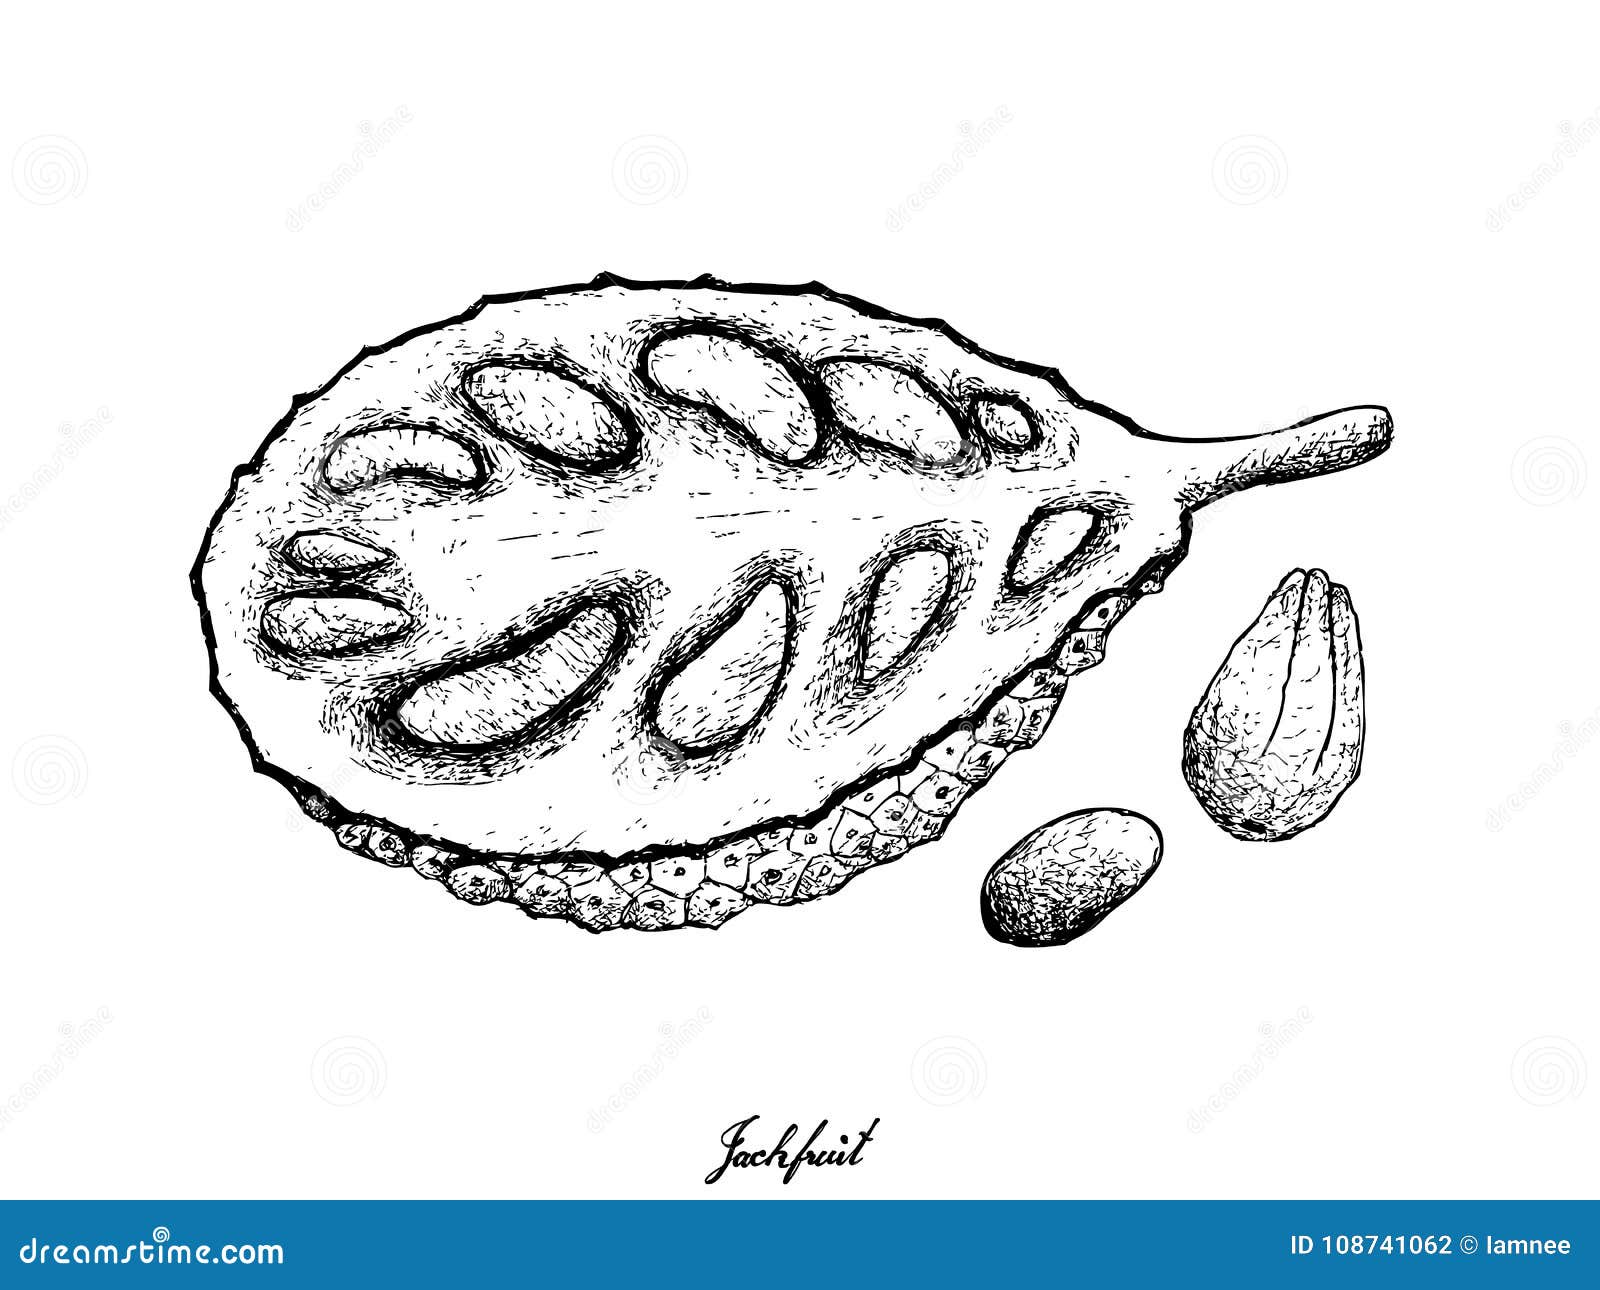 Hand Drawn of Ripe Jackfruit on White Background Stock Vector ...